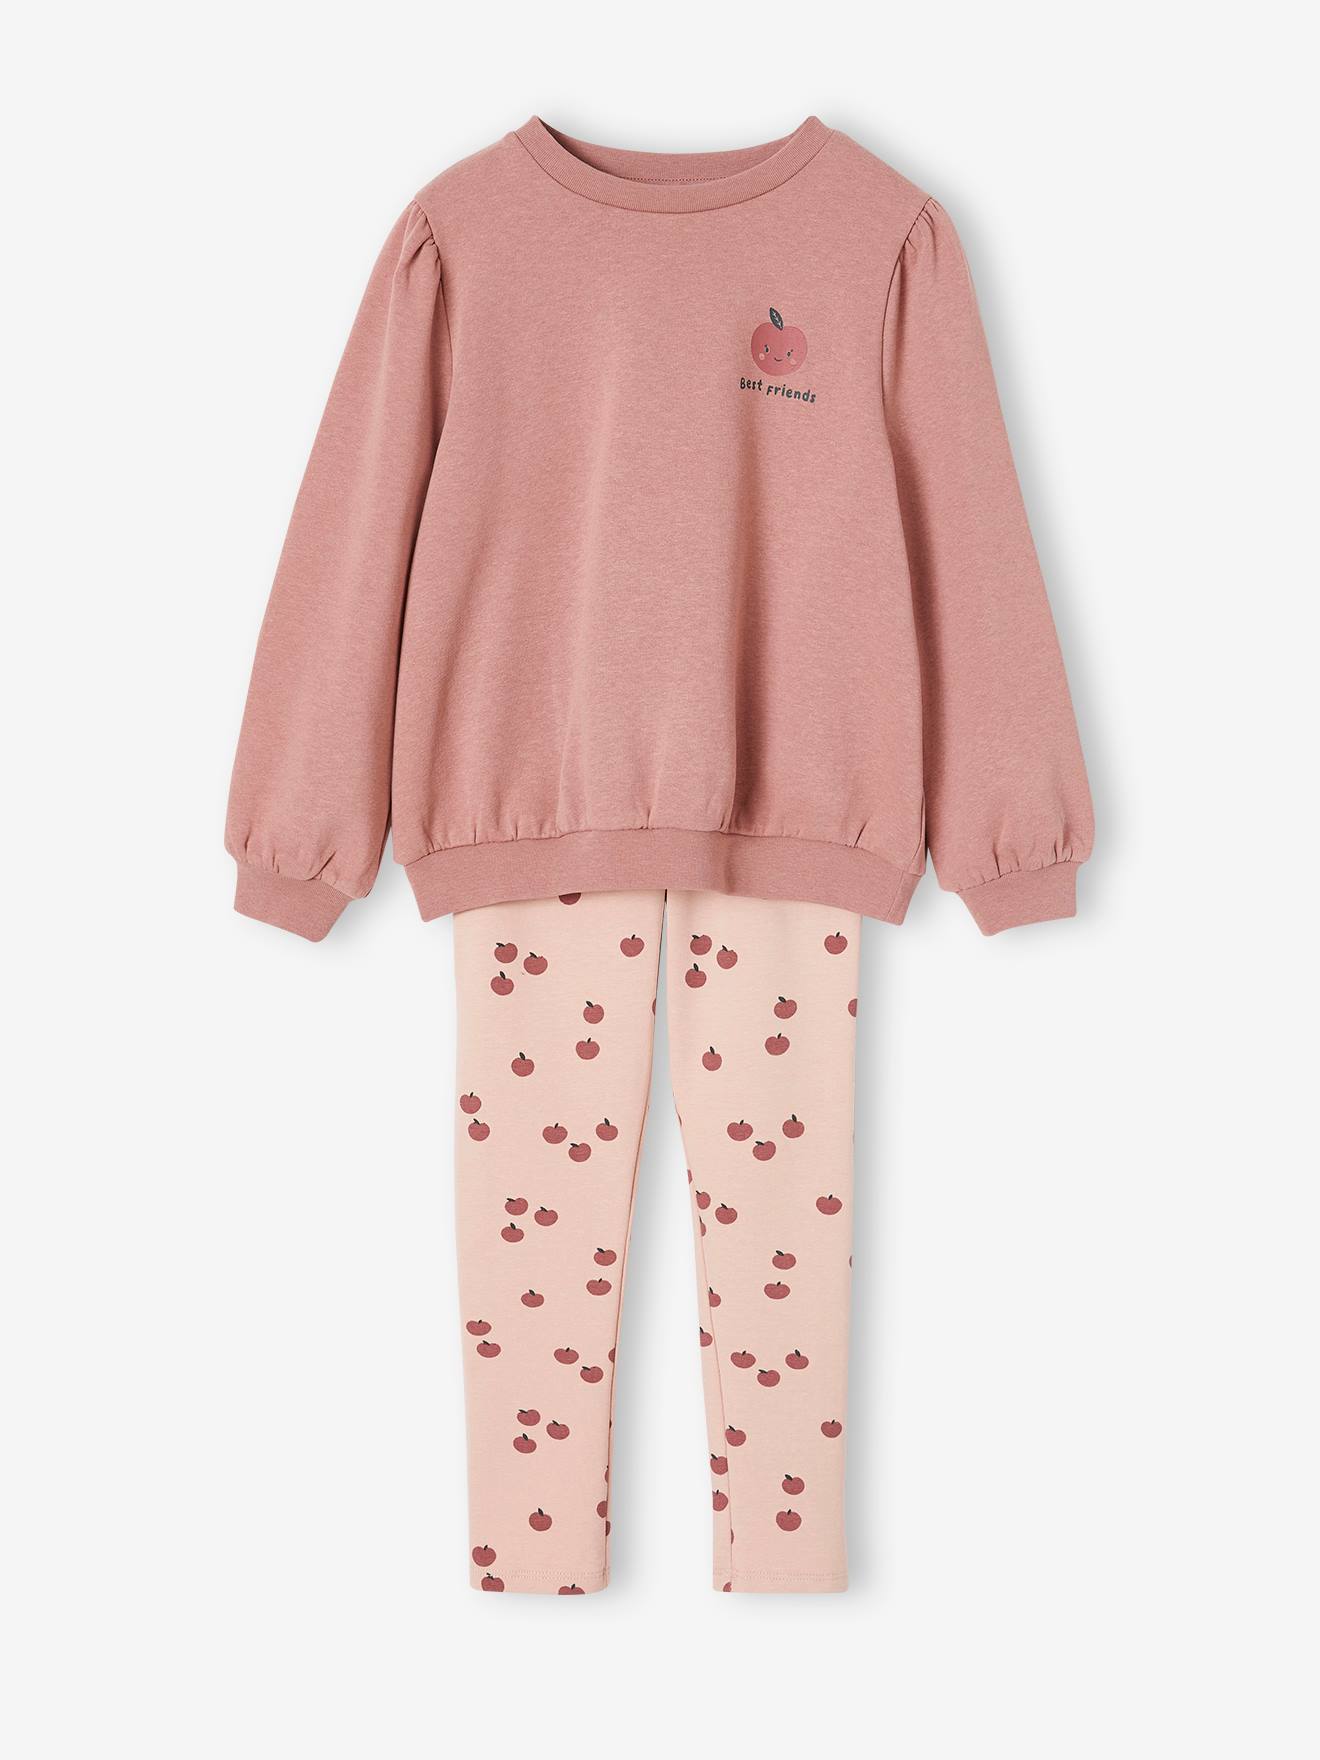 Sweatshirt + Printed Leggings Ensemble for Girls dusky pink